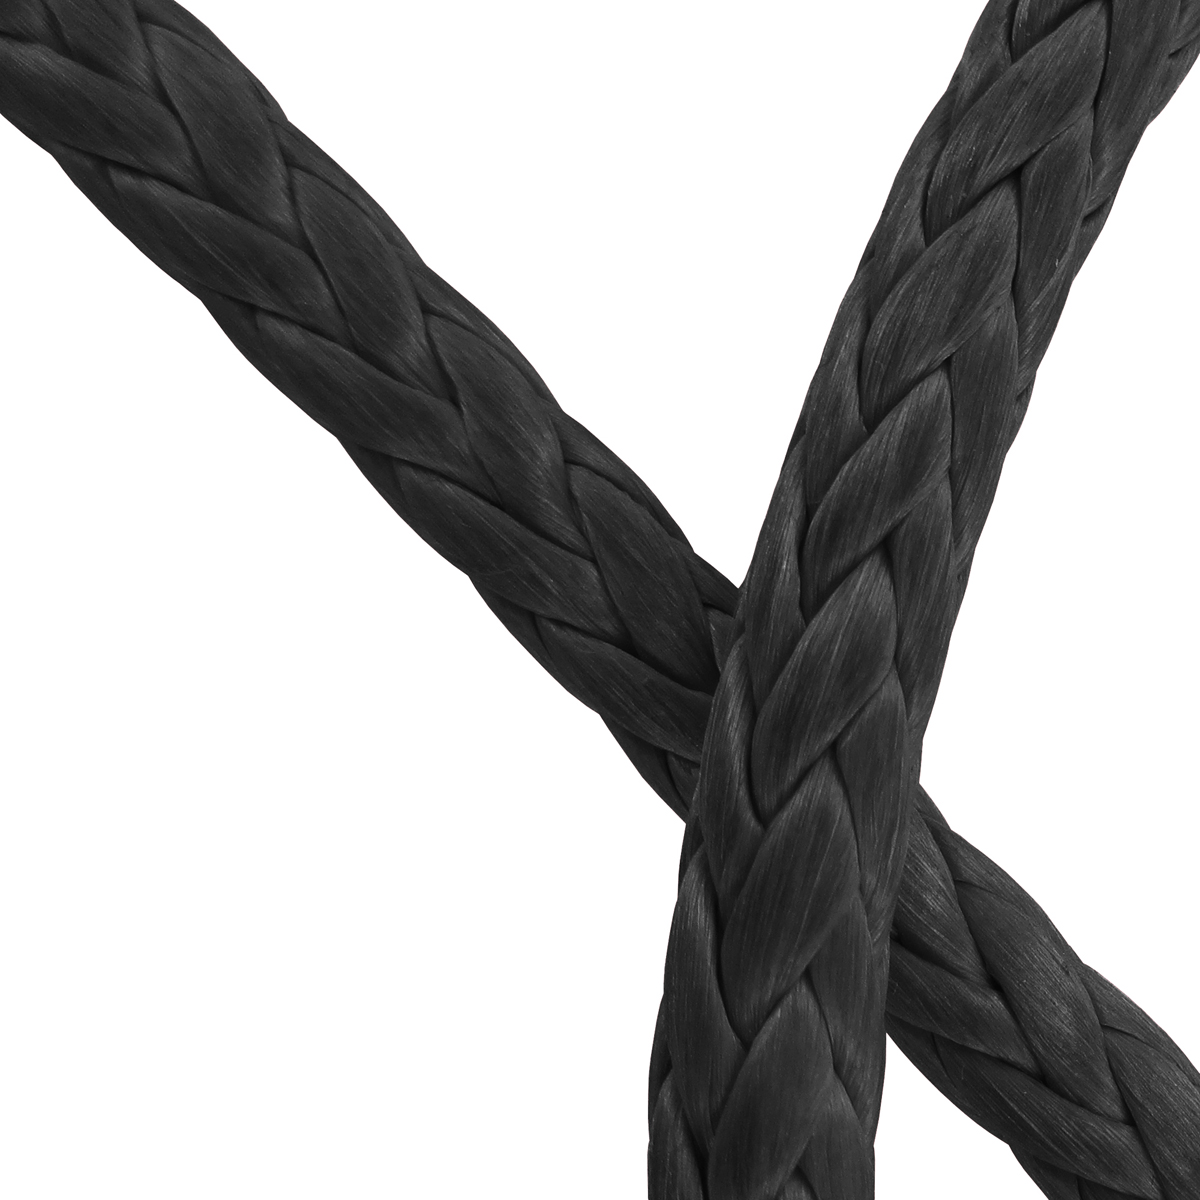 Amsteel Blue rope, black